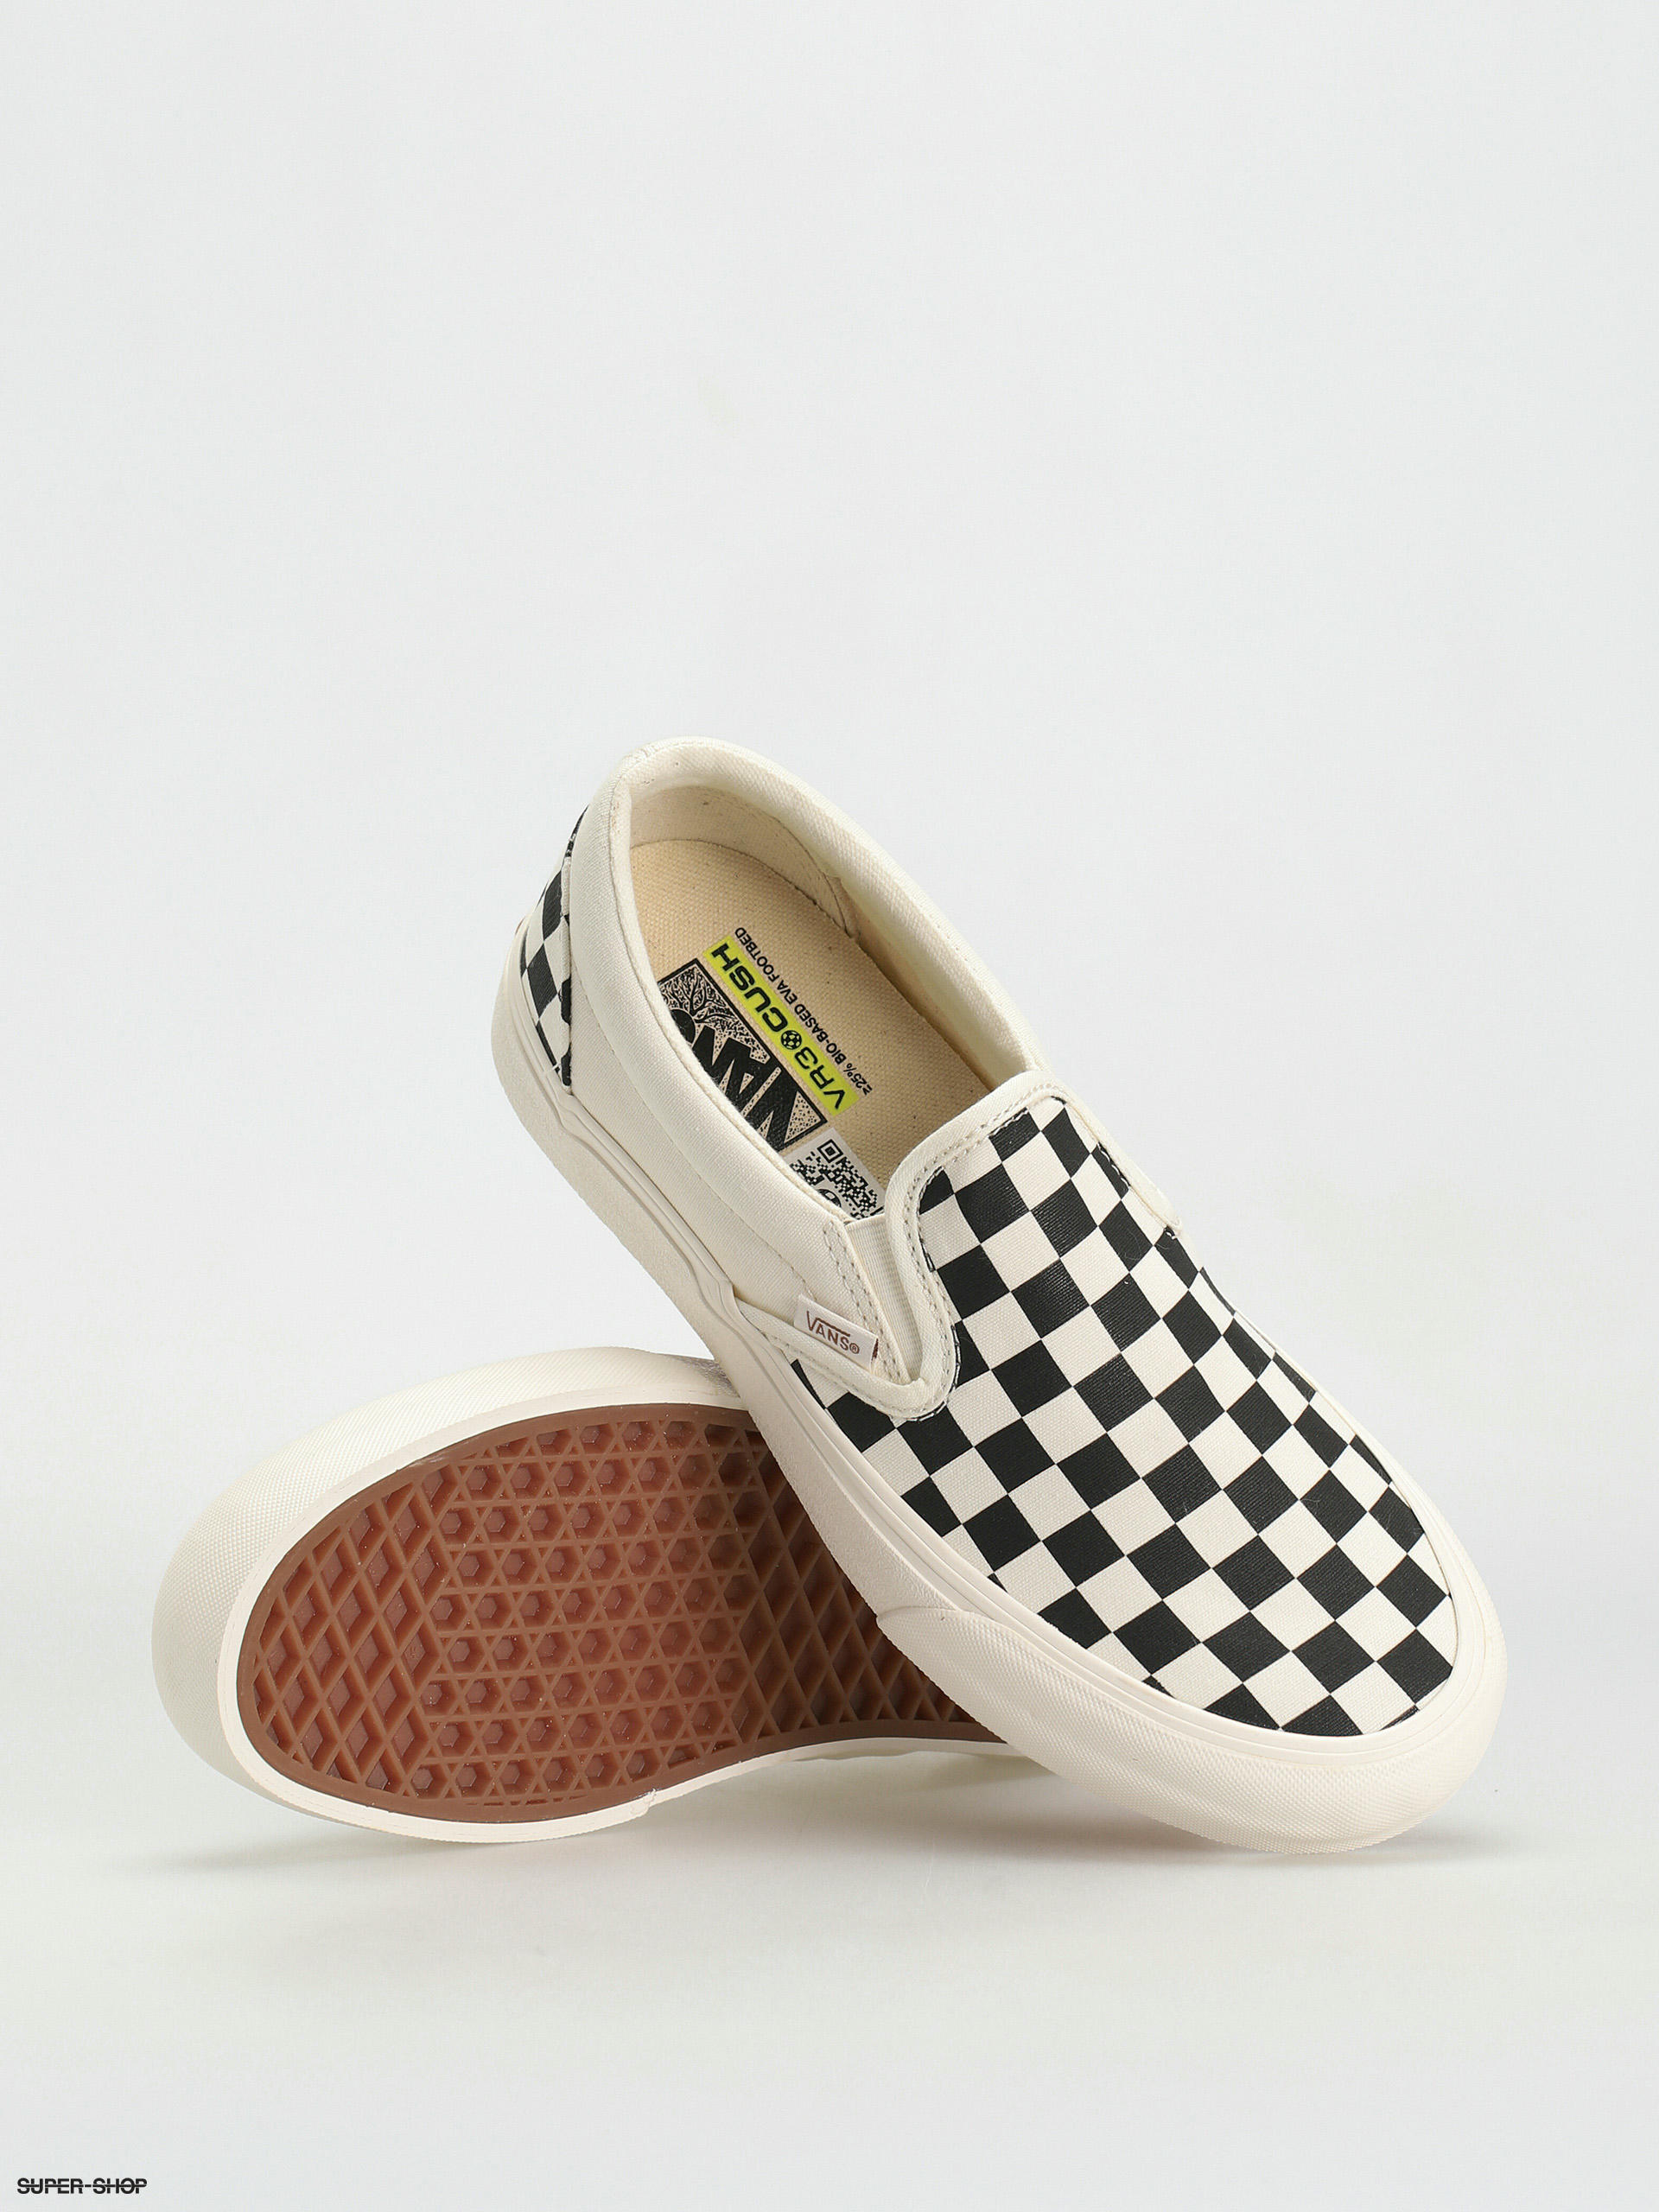 Vans VR3 Checkerboard Slip-On Shoes